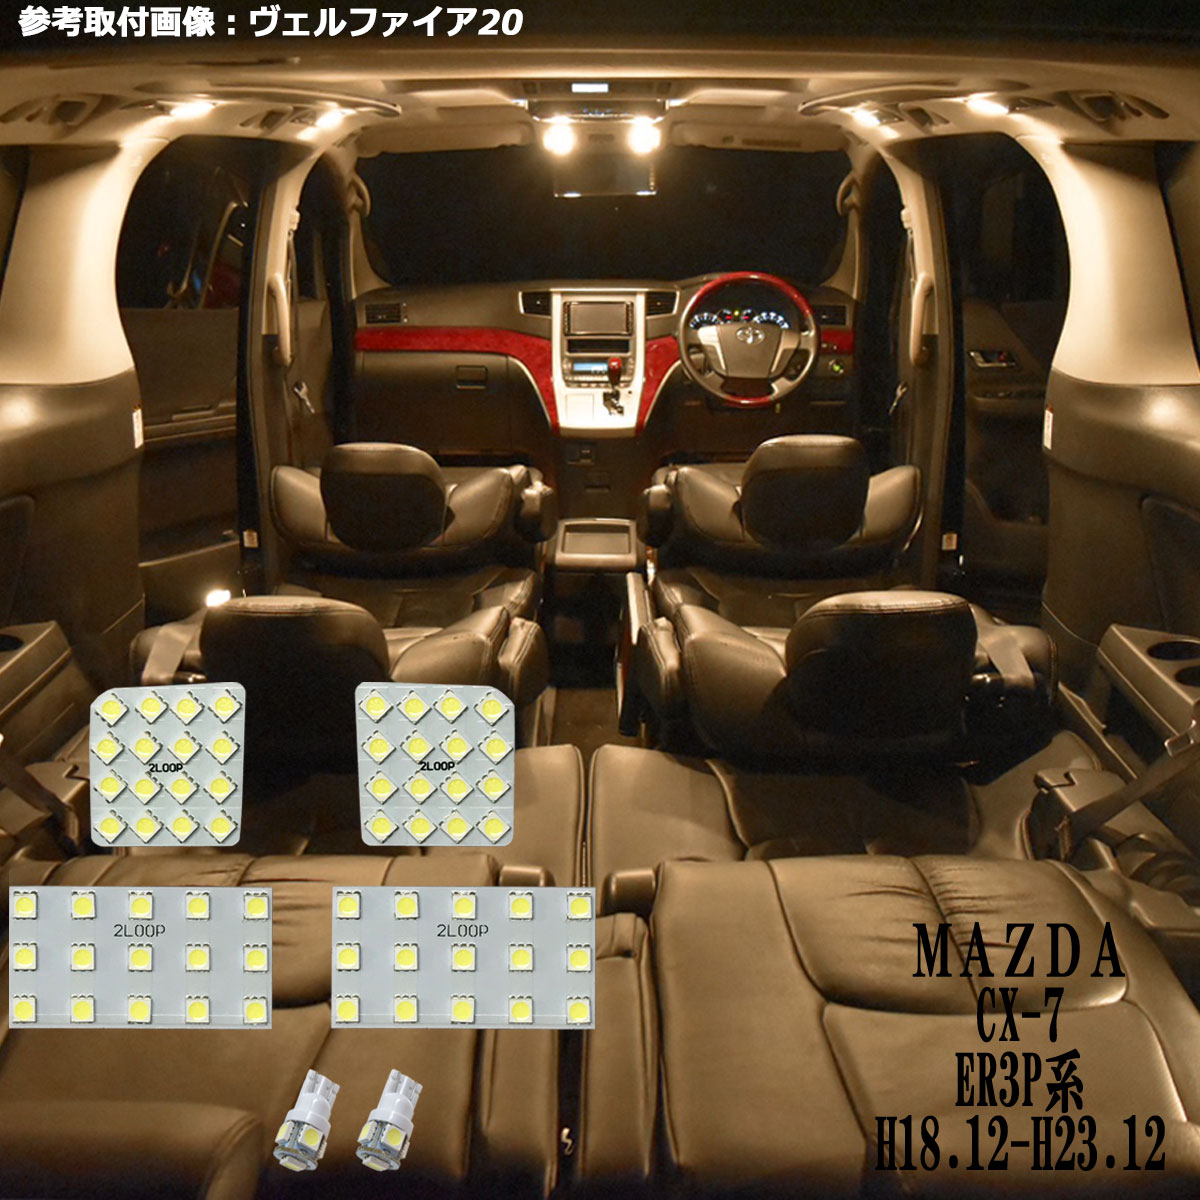 CX-7 ER3P系 LED ルームランプ 暖かい光 高級感を追求 3000K 車検対応 車種専用設計 3チップSMD6点1年保証